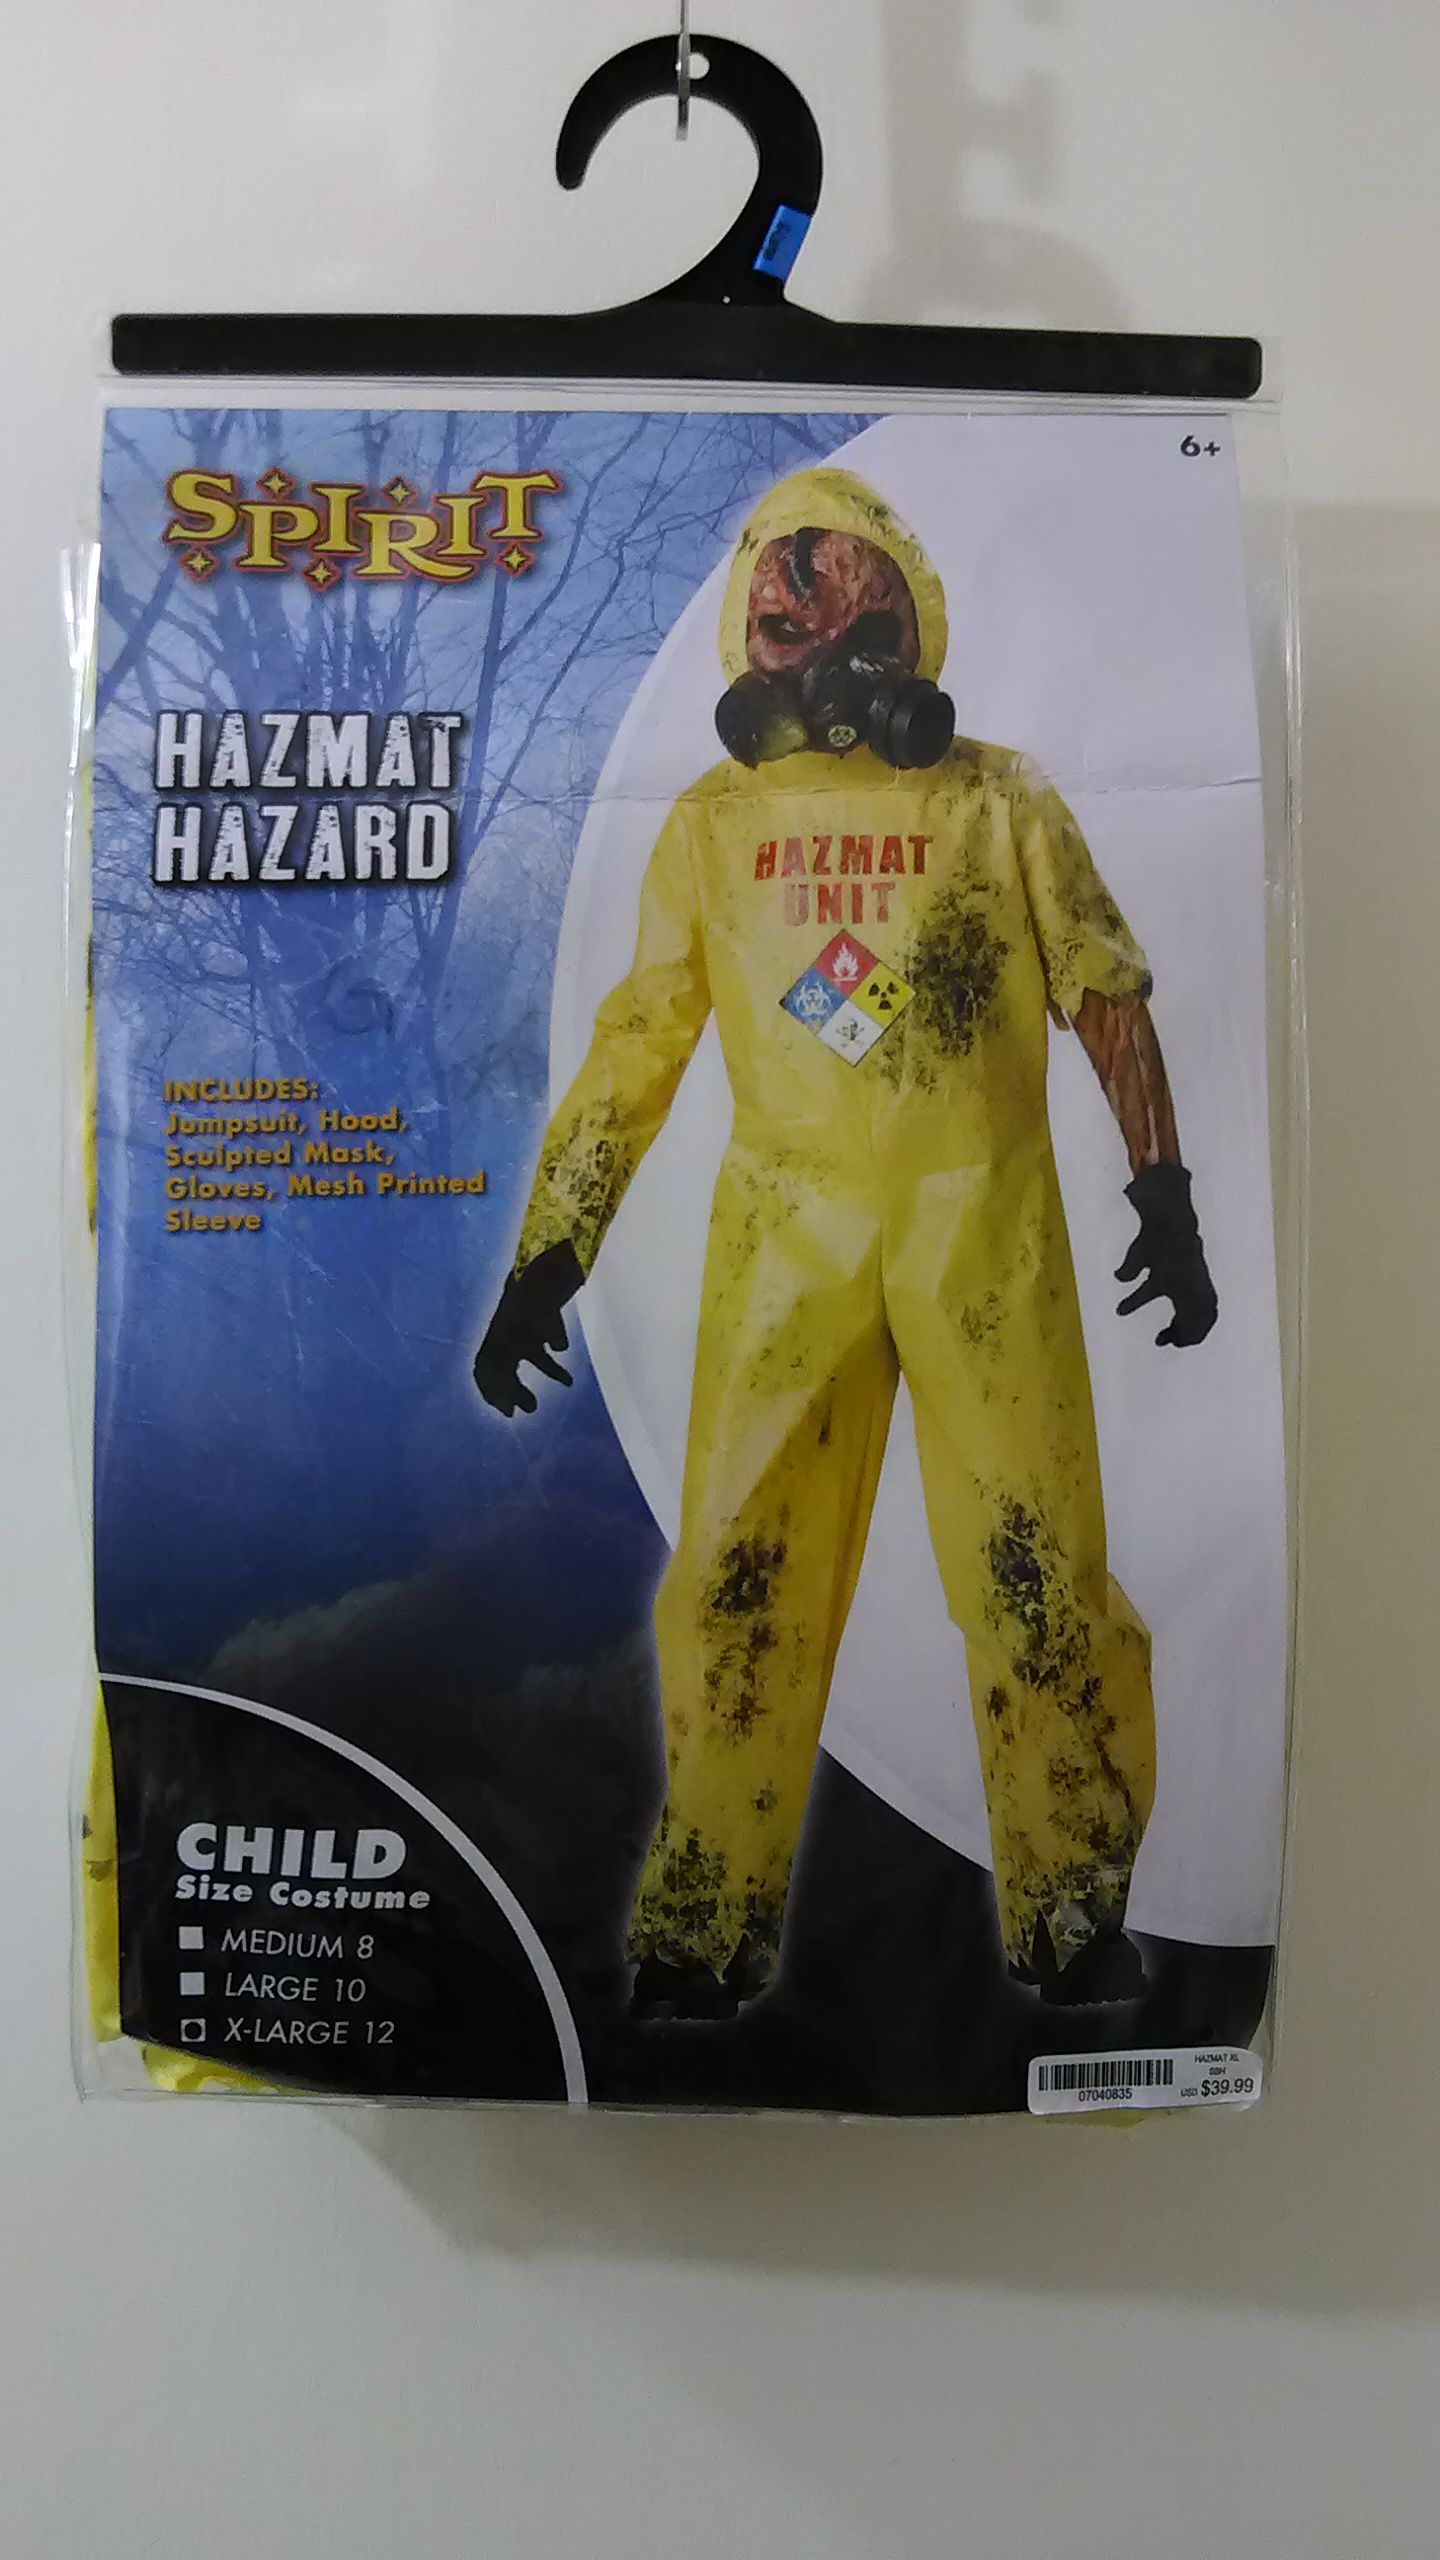 BRAND NEW HAZMAT HAZARD CHILD SIZE X-LARGE 12 HALLOWEEN COSTUME $30